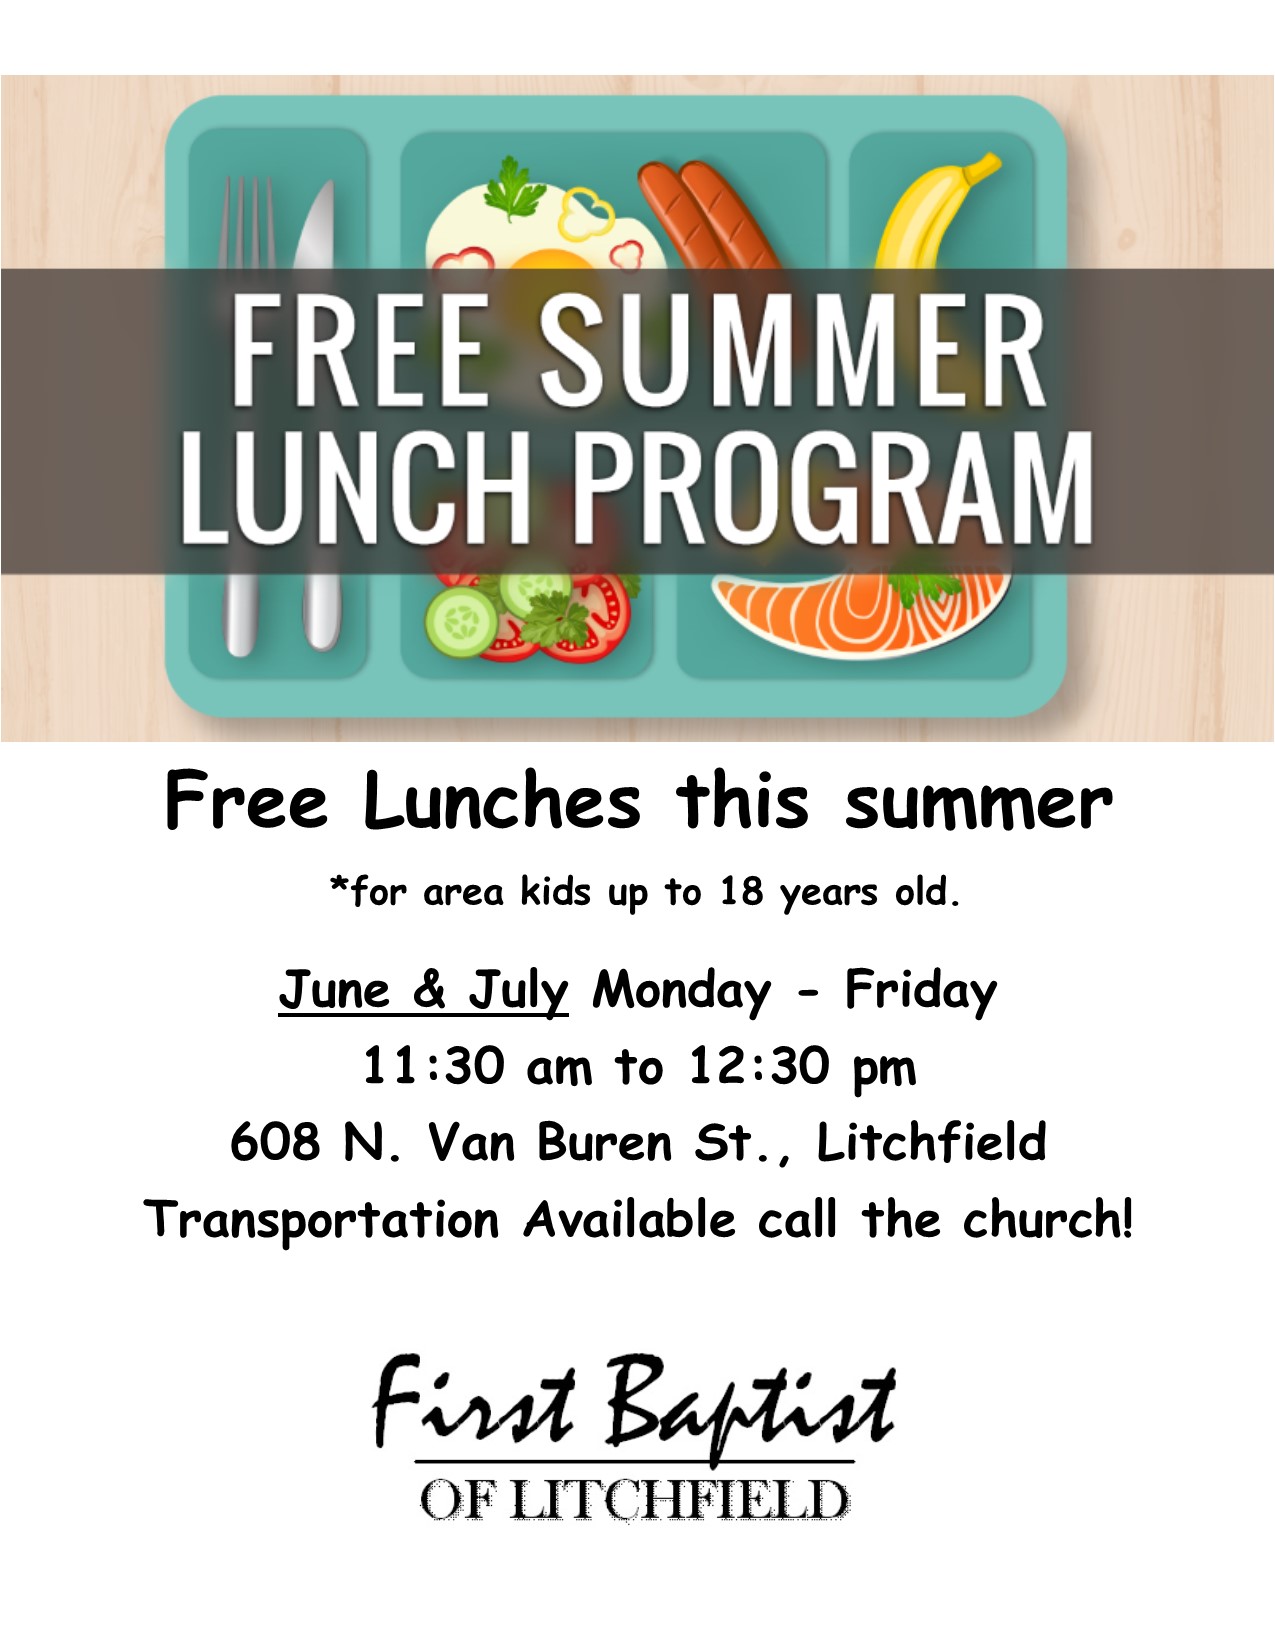 Summer Lunch Program The City of Litchfield